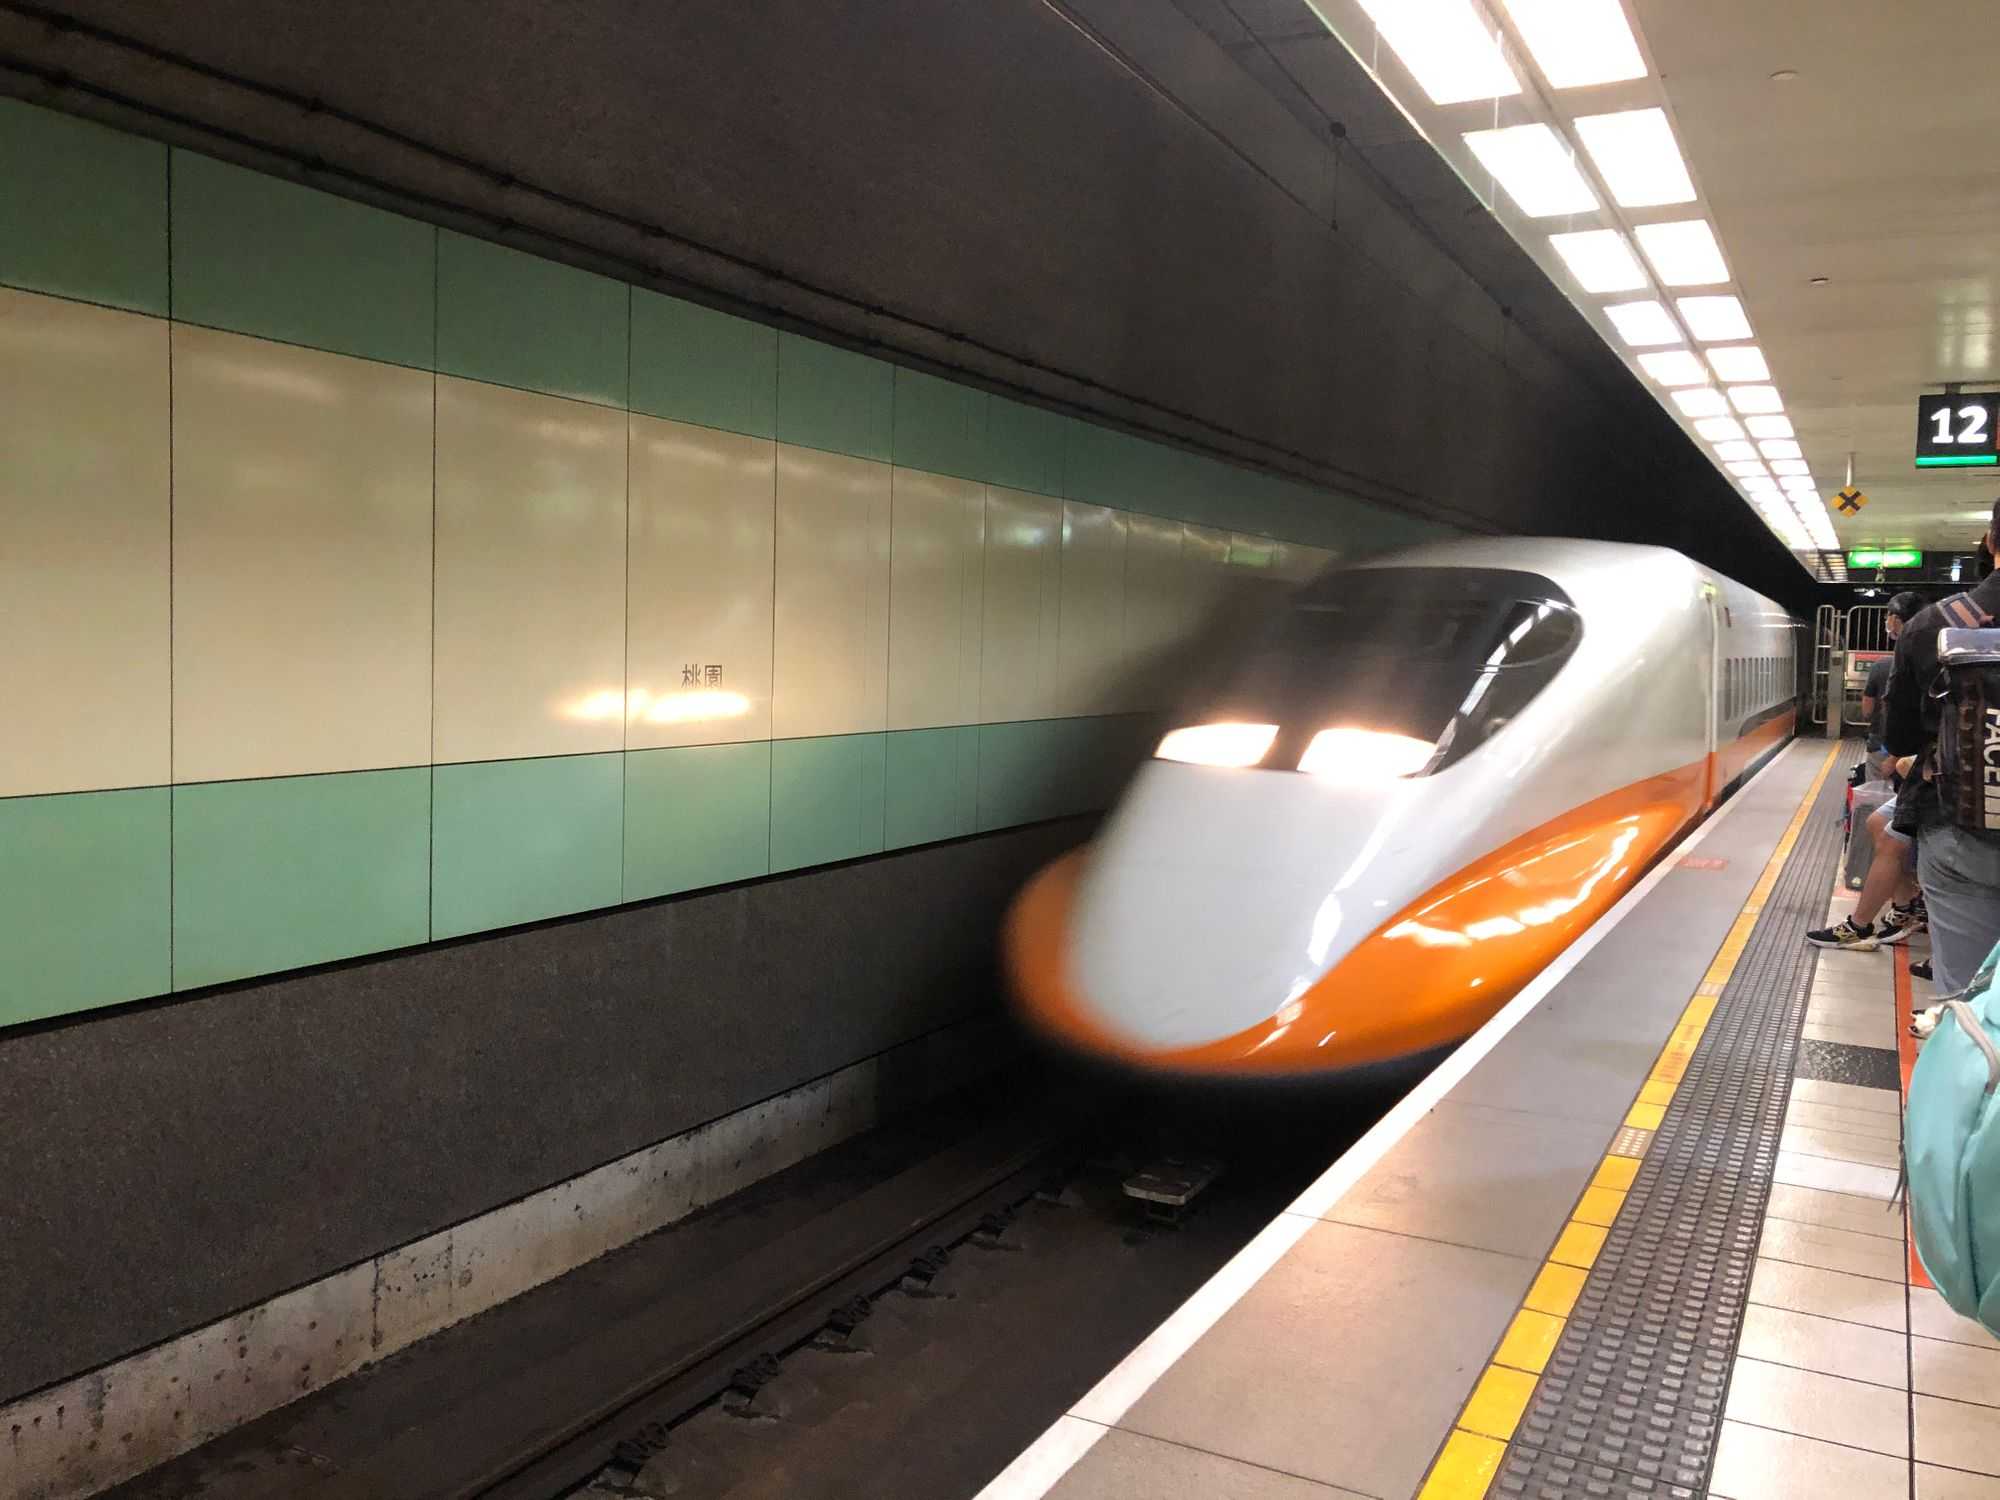 Taiwan High Speed Rail (HSR) (Image by author)